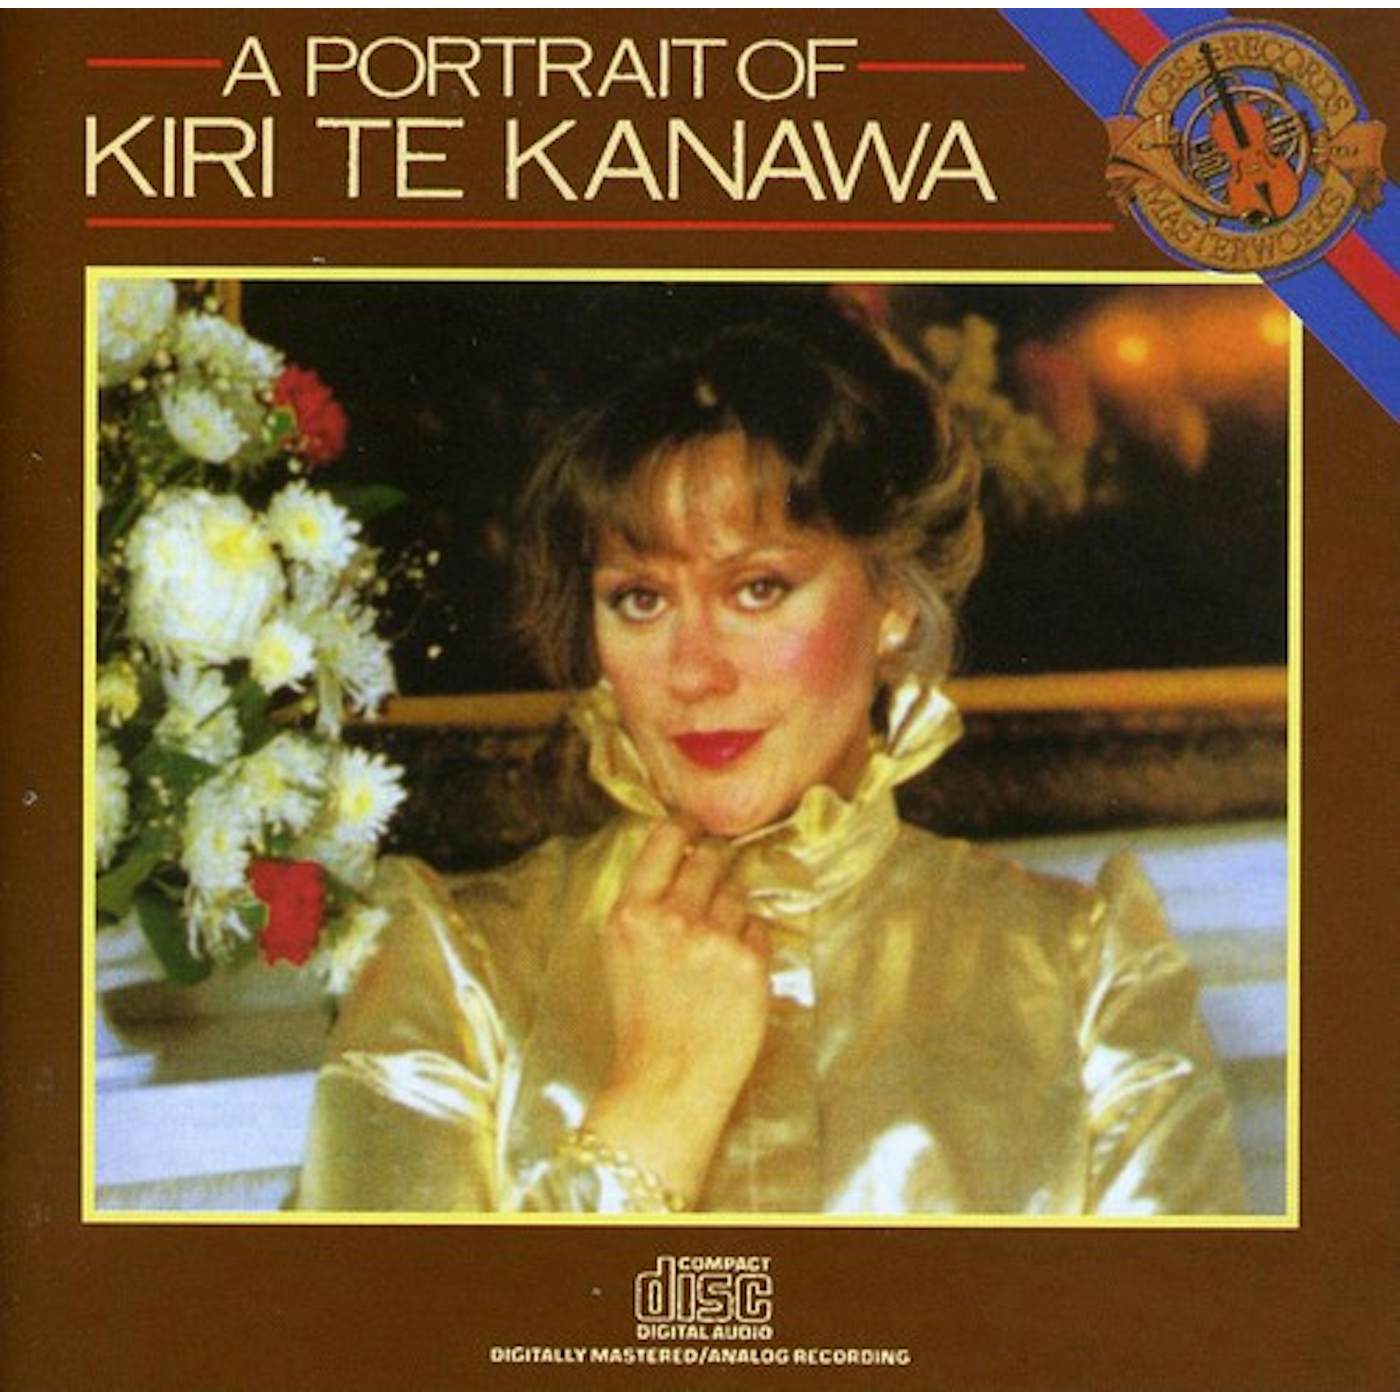 PORTRAIT OF KIRI TE KANAWAA CD